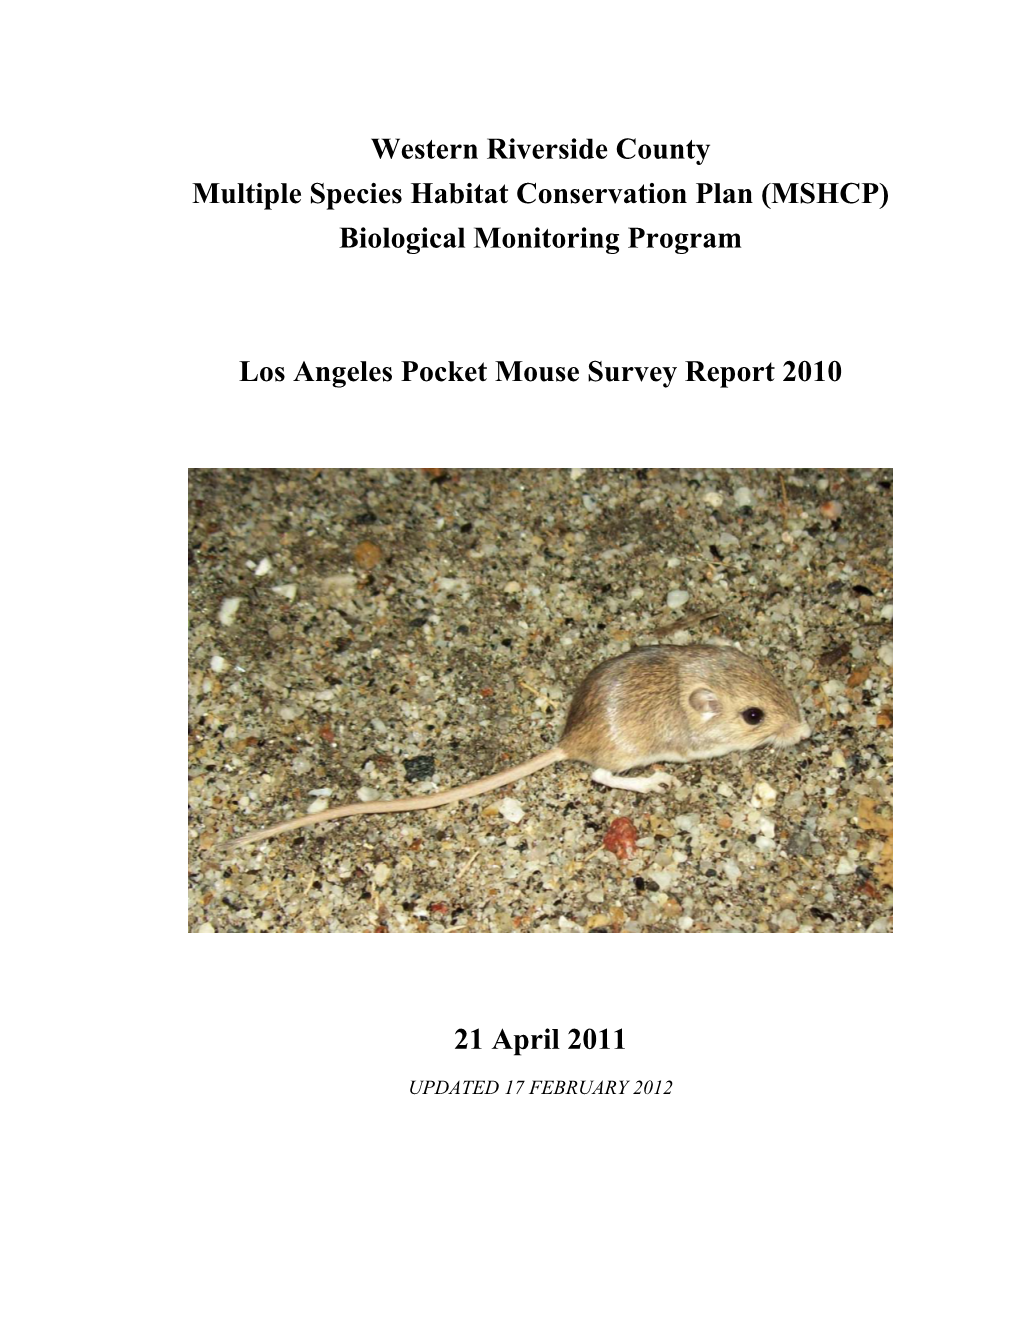 Los Angeles Pocket Mouse Survey Report 2010